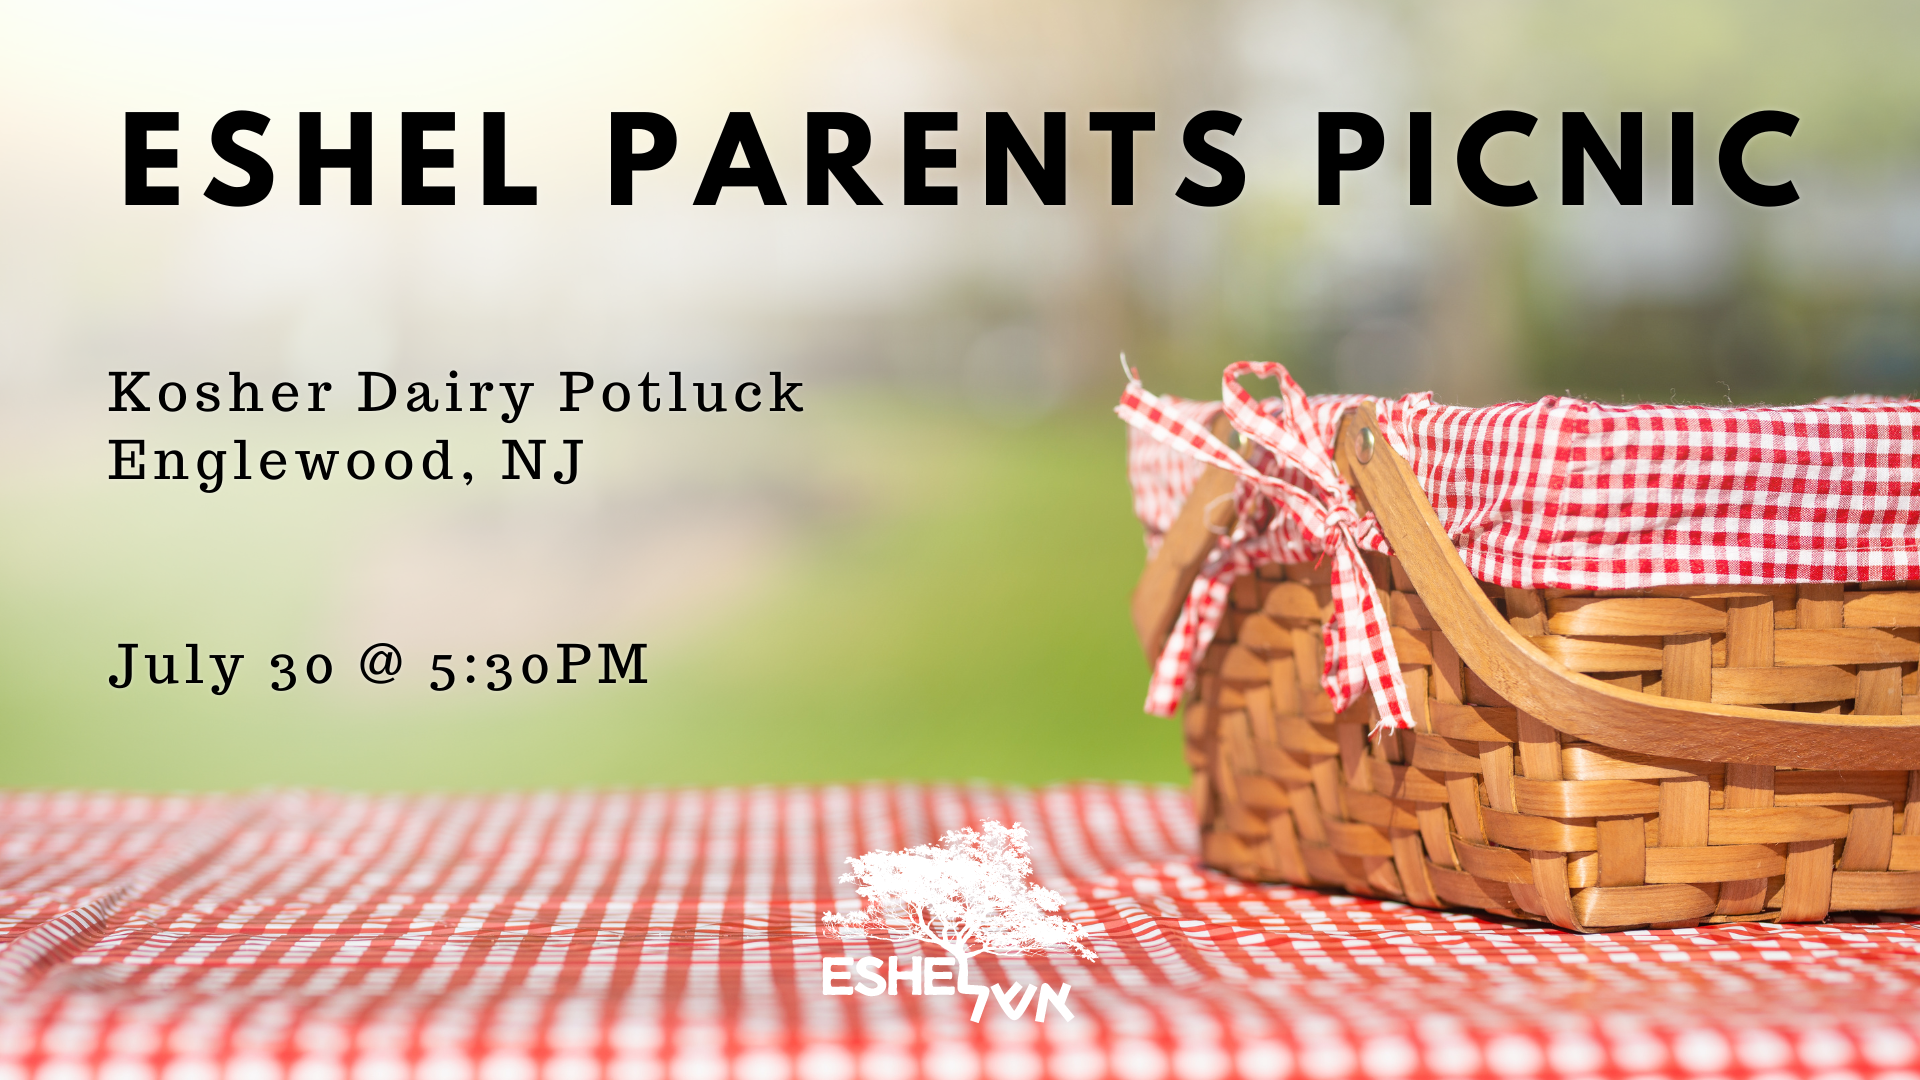 Eshel Parent picnic kosher dairy potluck englewood NJ July 30 @ 5:30PM